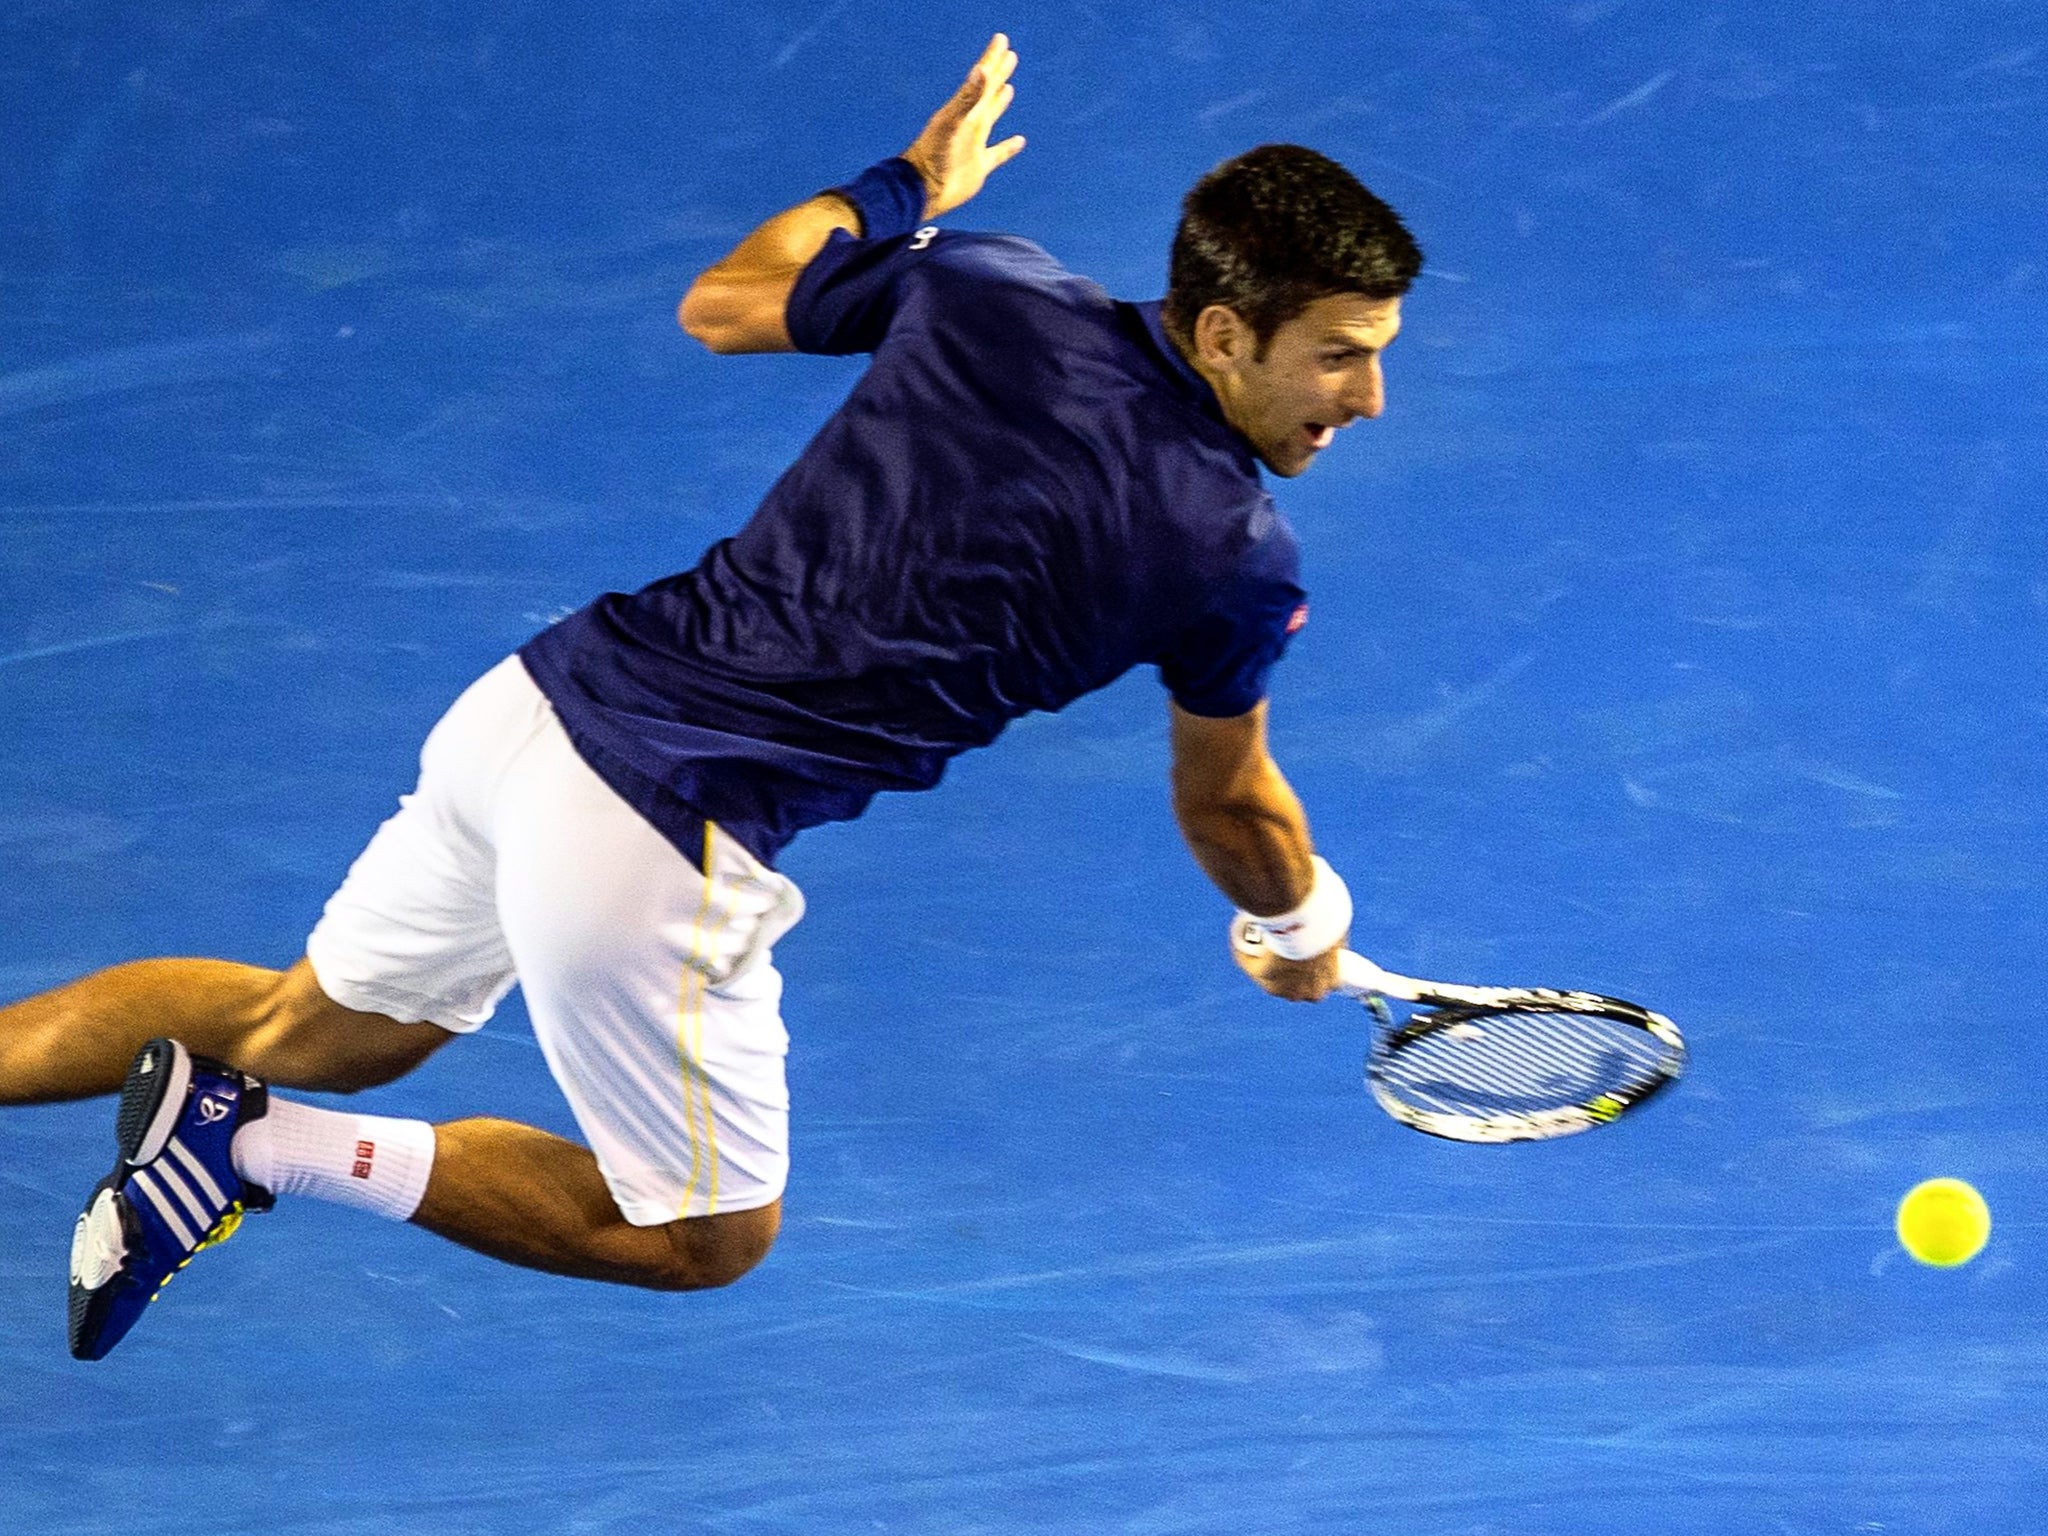 Novak Djokovic in action at the Australian Open